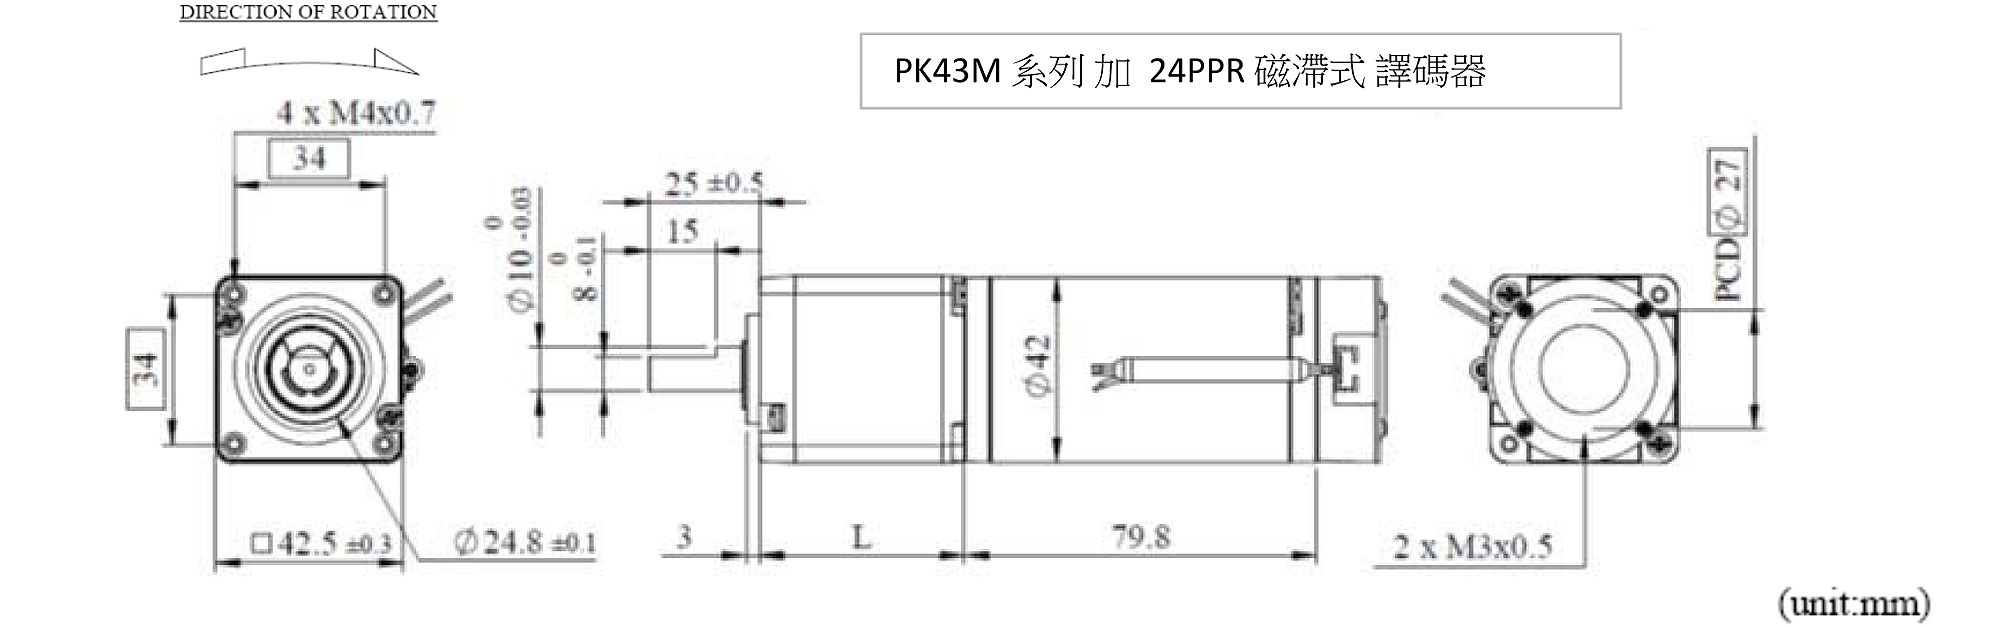 PK43MDE 外觀尺寸